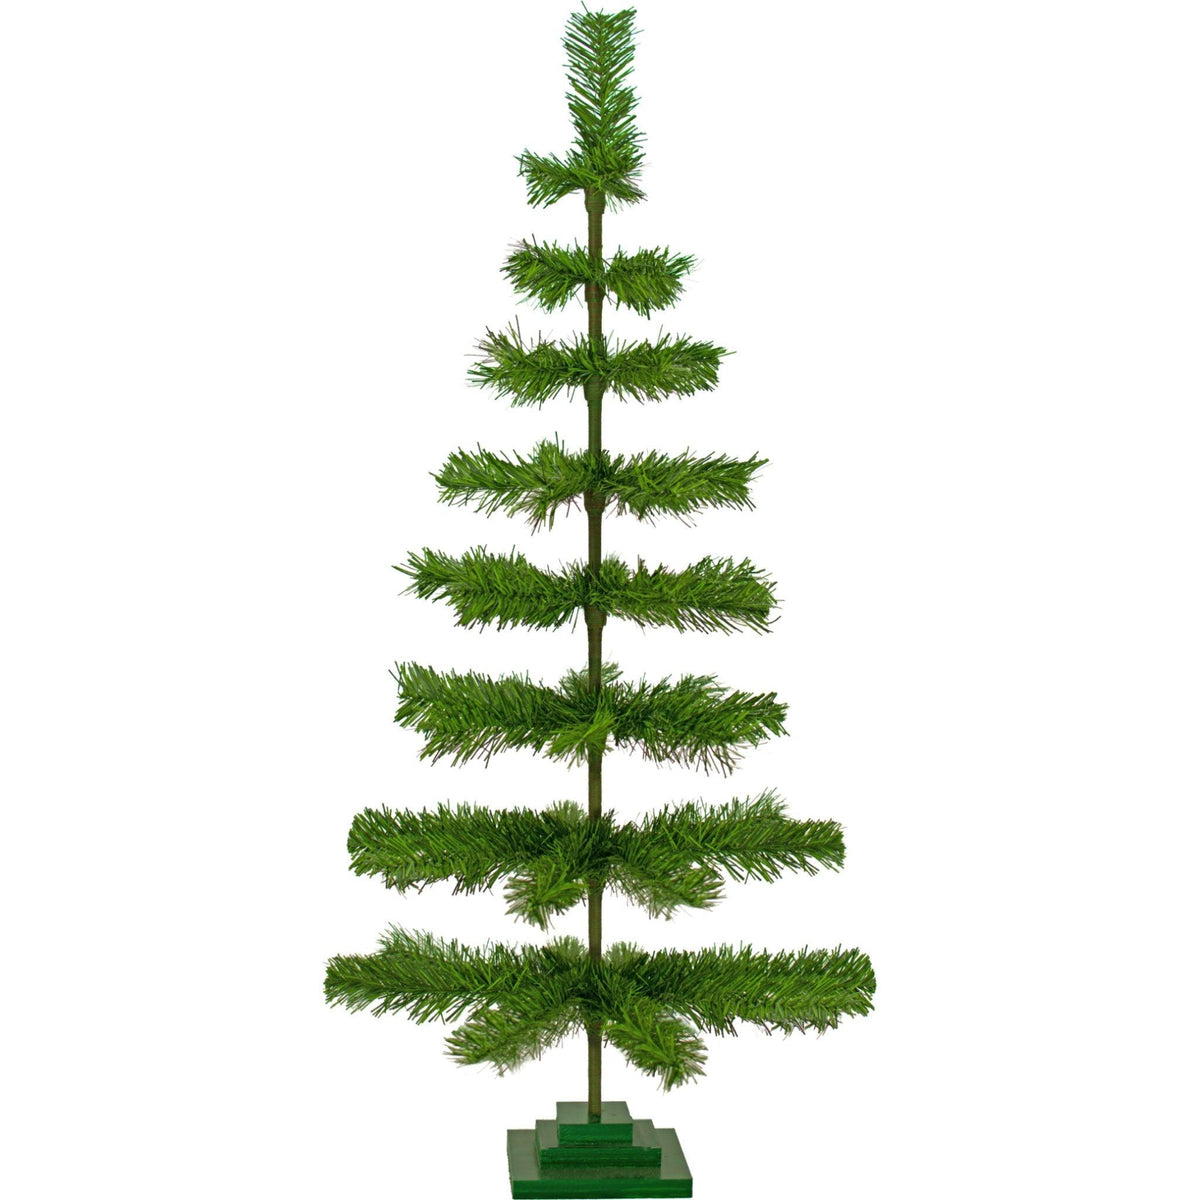 Lee Display's 48in Tall Alpine Green Tinsel Christmas Tree on sale at leedisplay.com